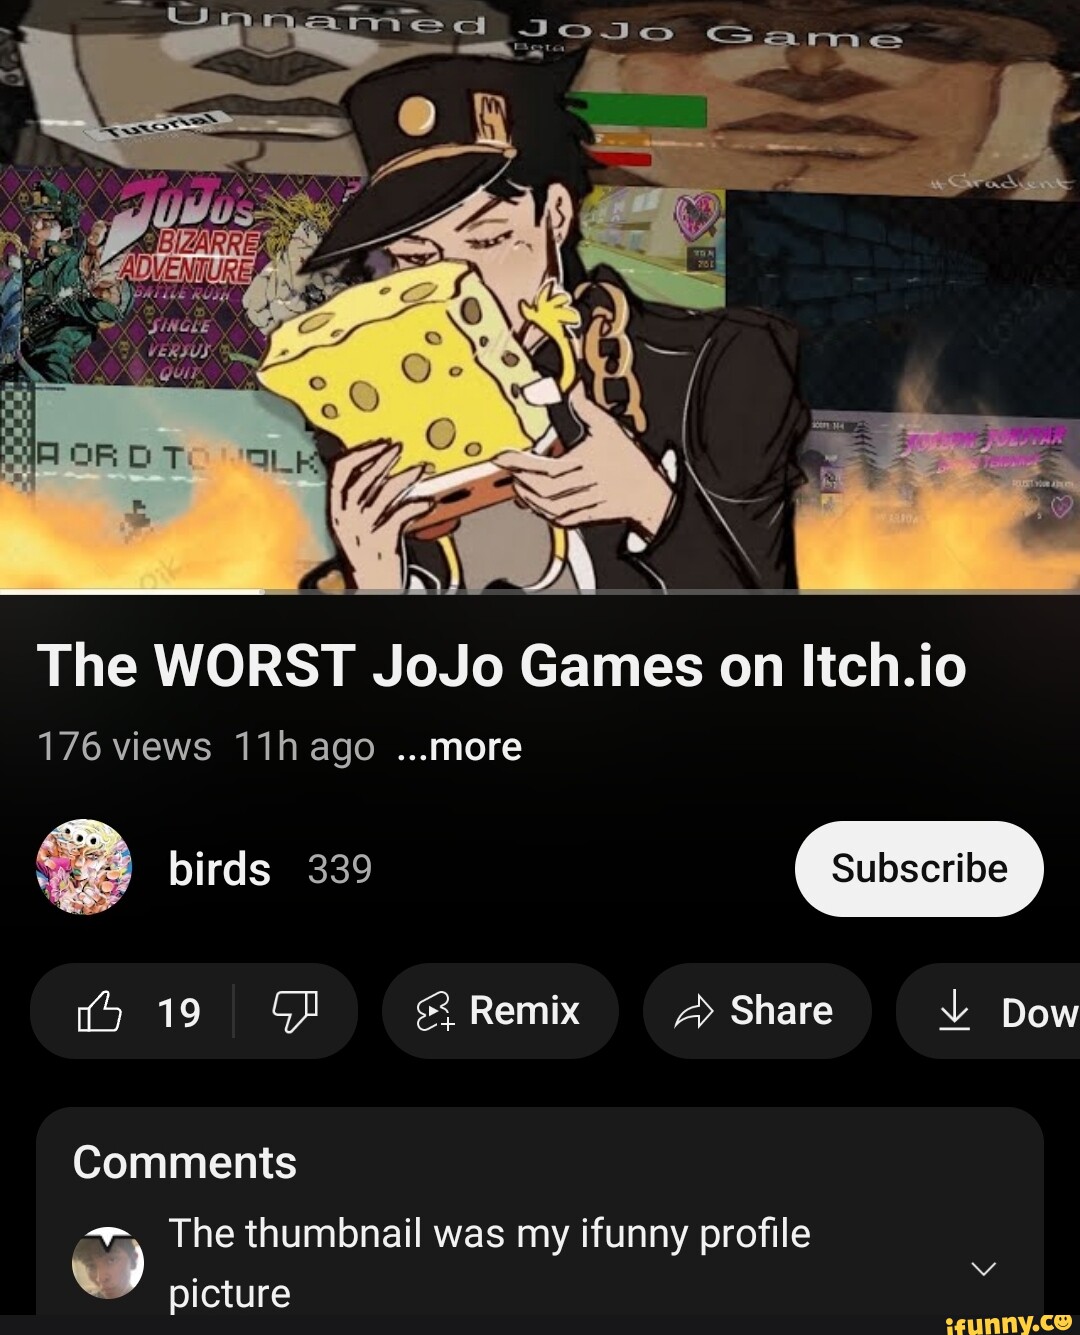 Same wa The WORST JoJo Games on Itch.io 176 views ago more SS